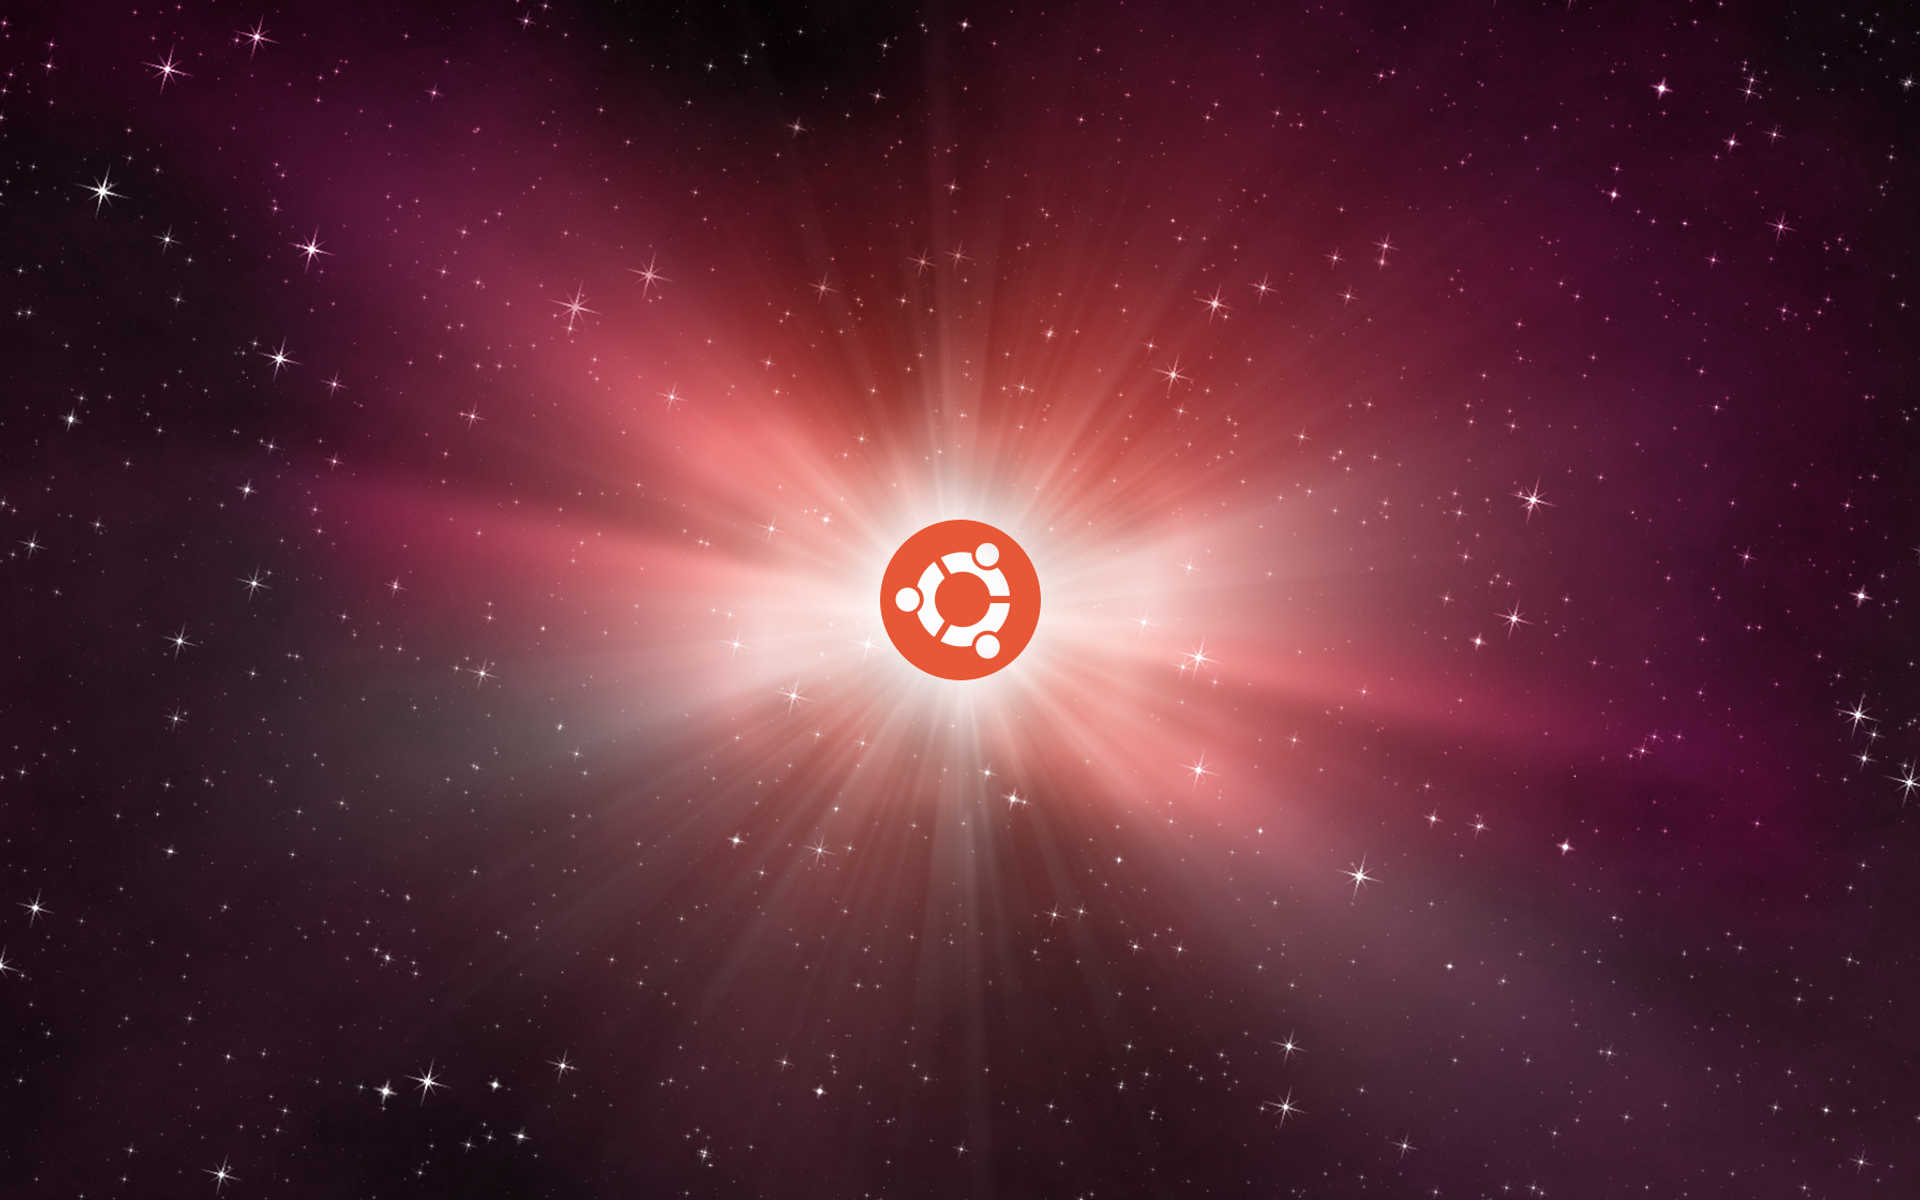 ubuntuの壁紙,天体,空,雰囲気,スペース,宇宙